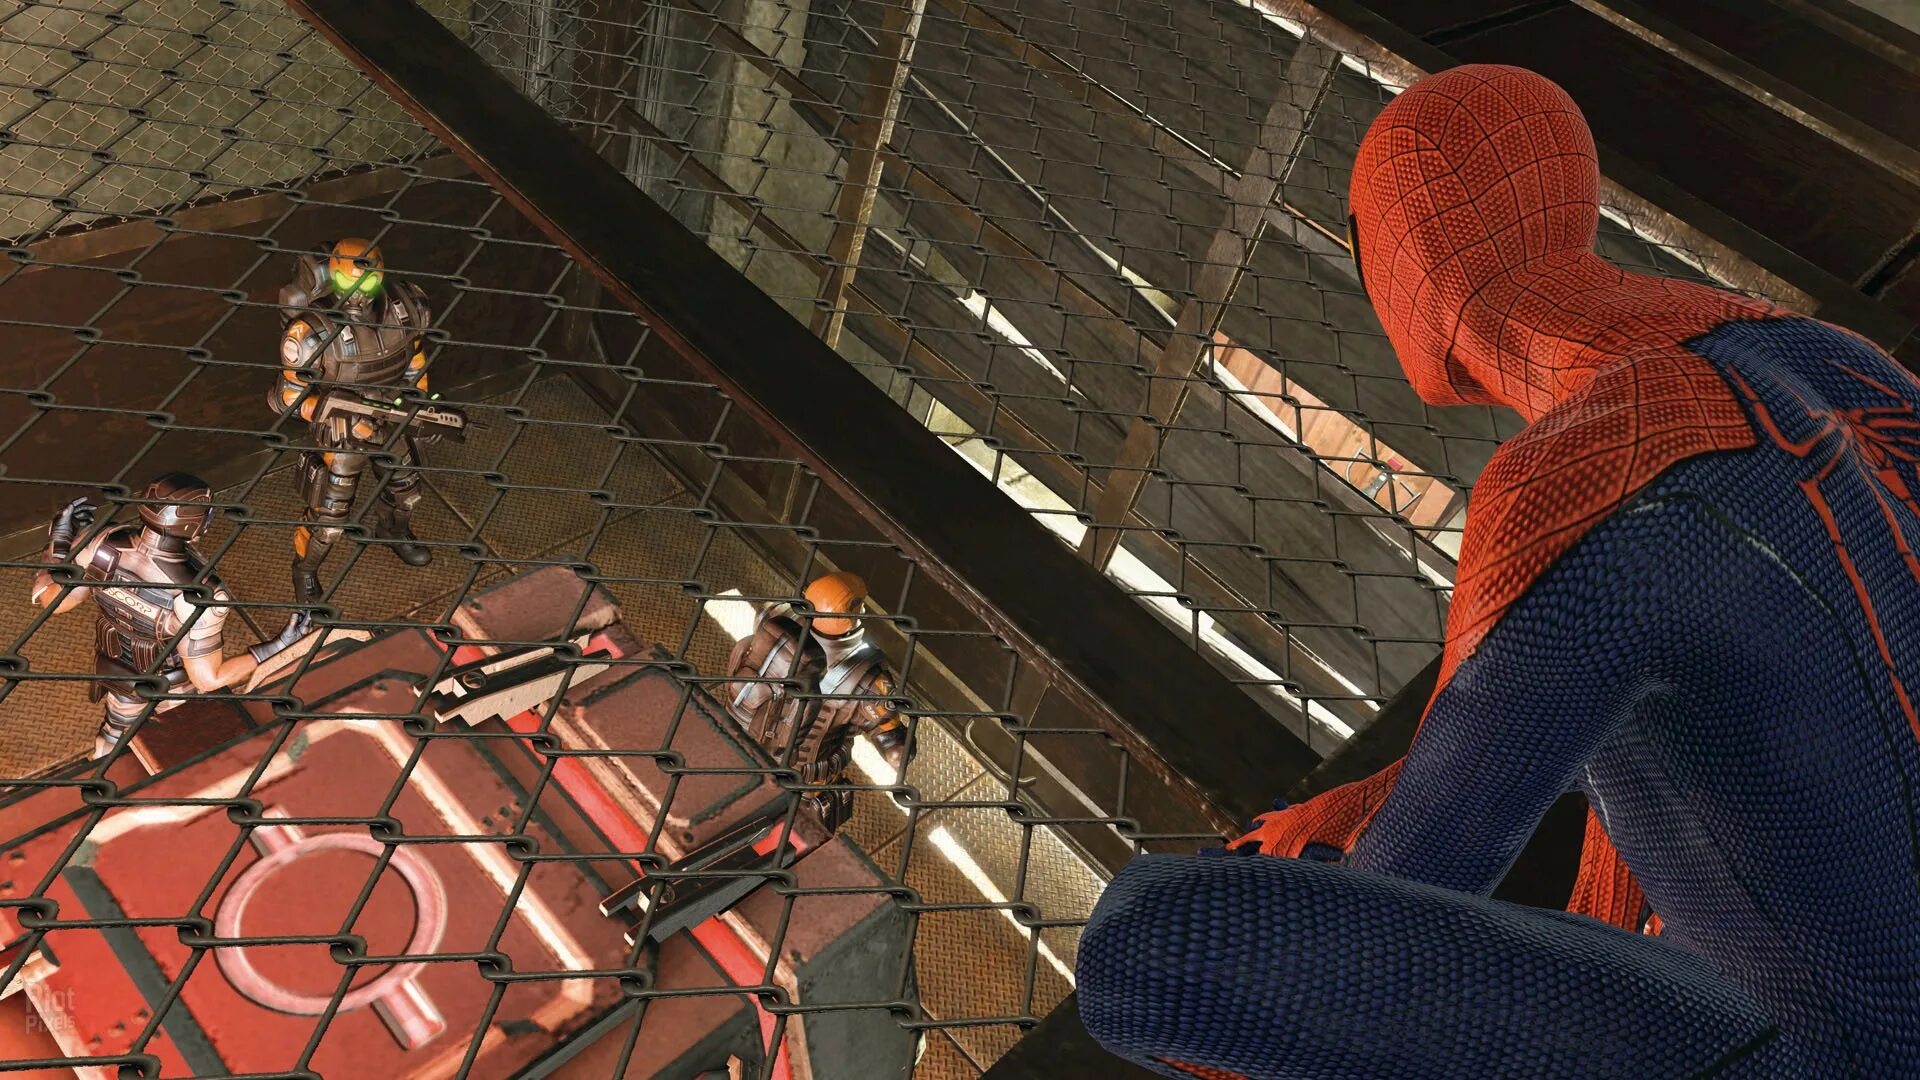 Открой игры человека паука. The amazing Spider-man (игра, 2012). The amazing Spider-man 2 (игра, 2014). Человек паук игра 2012. Spider-man 3 (игра).